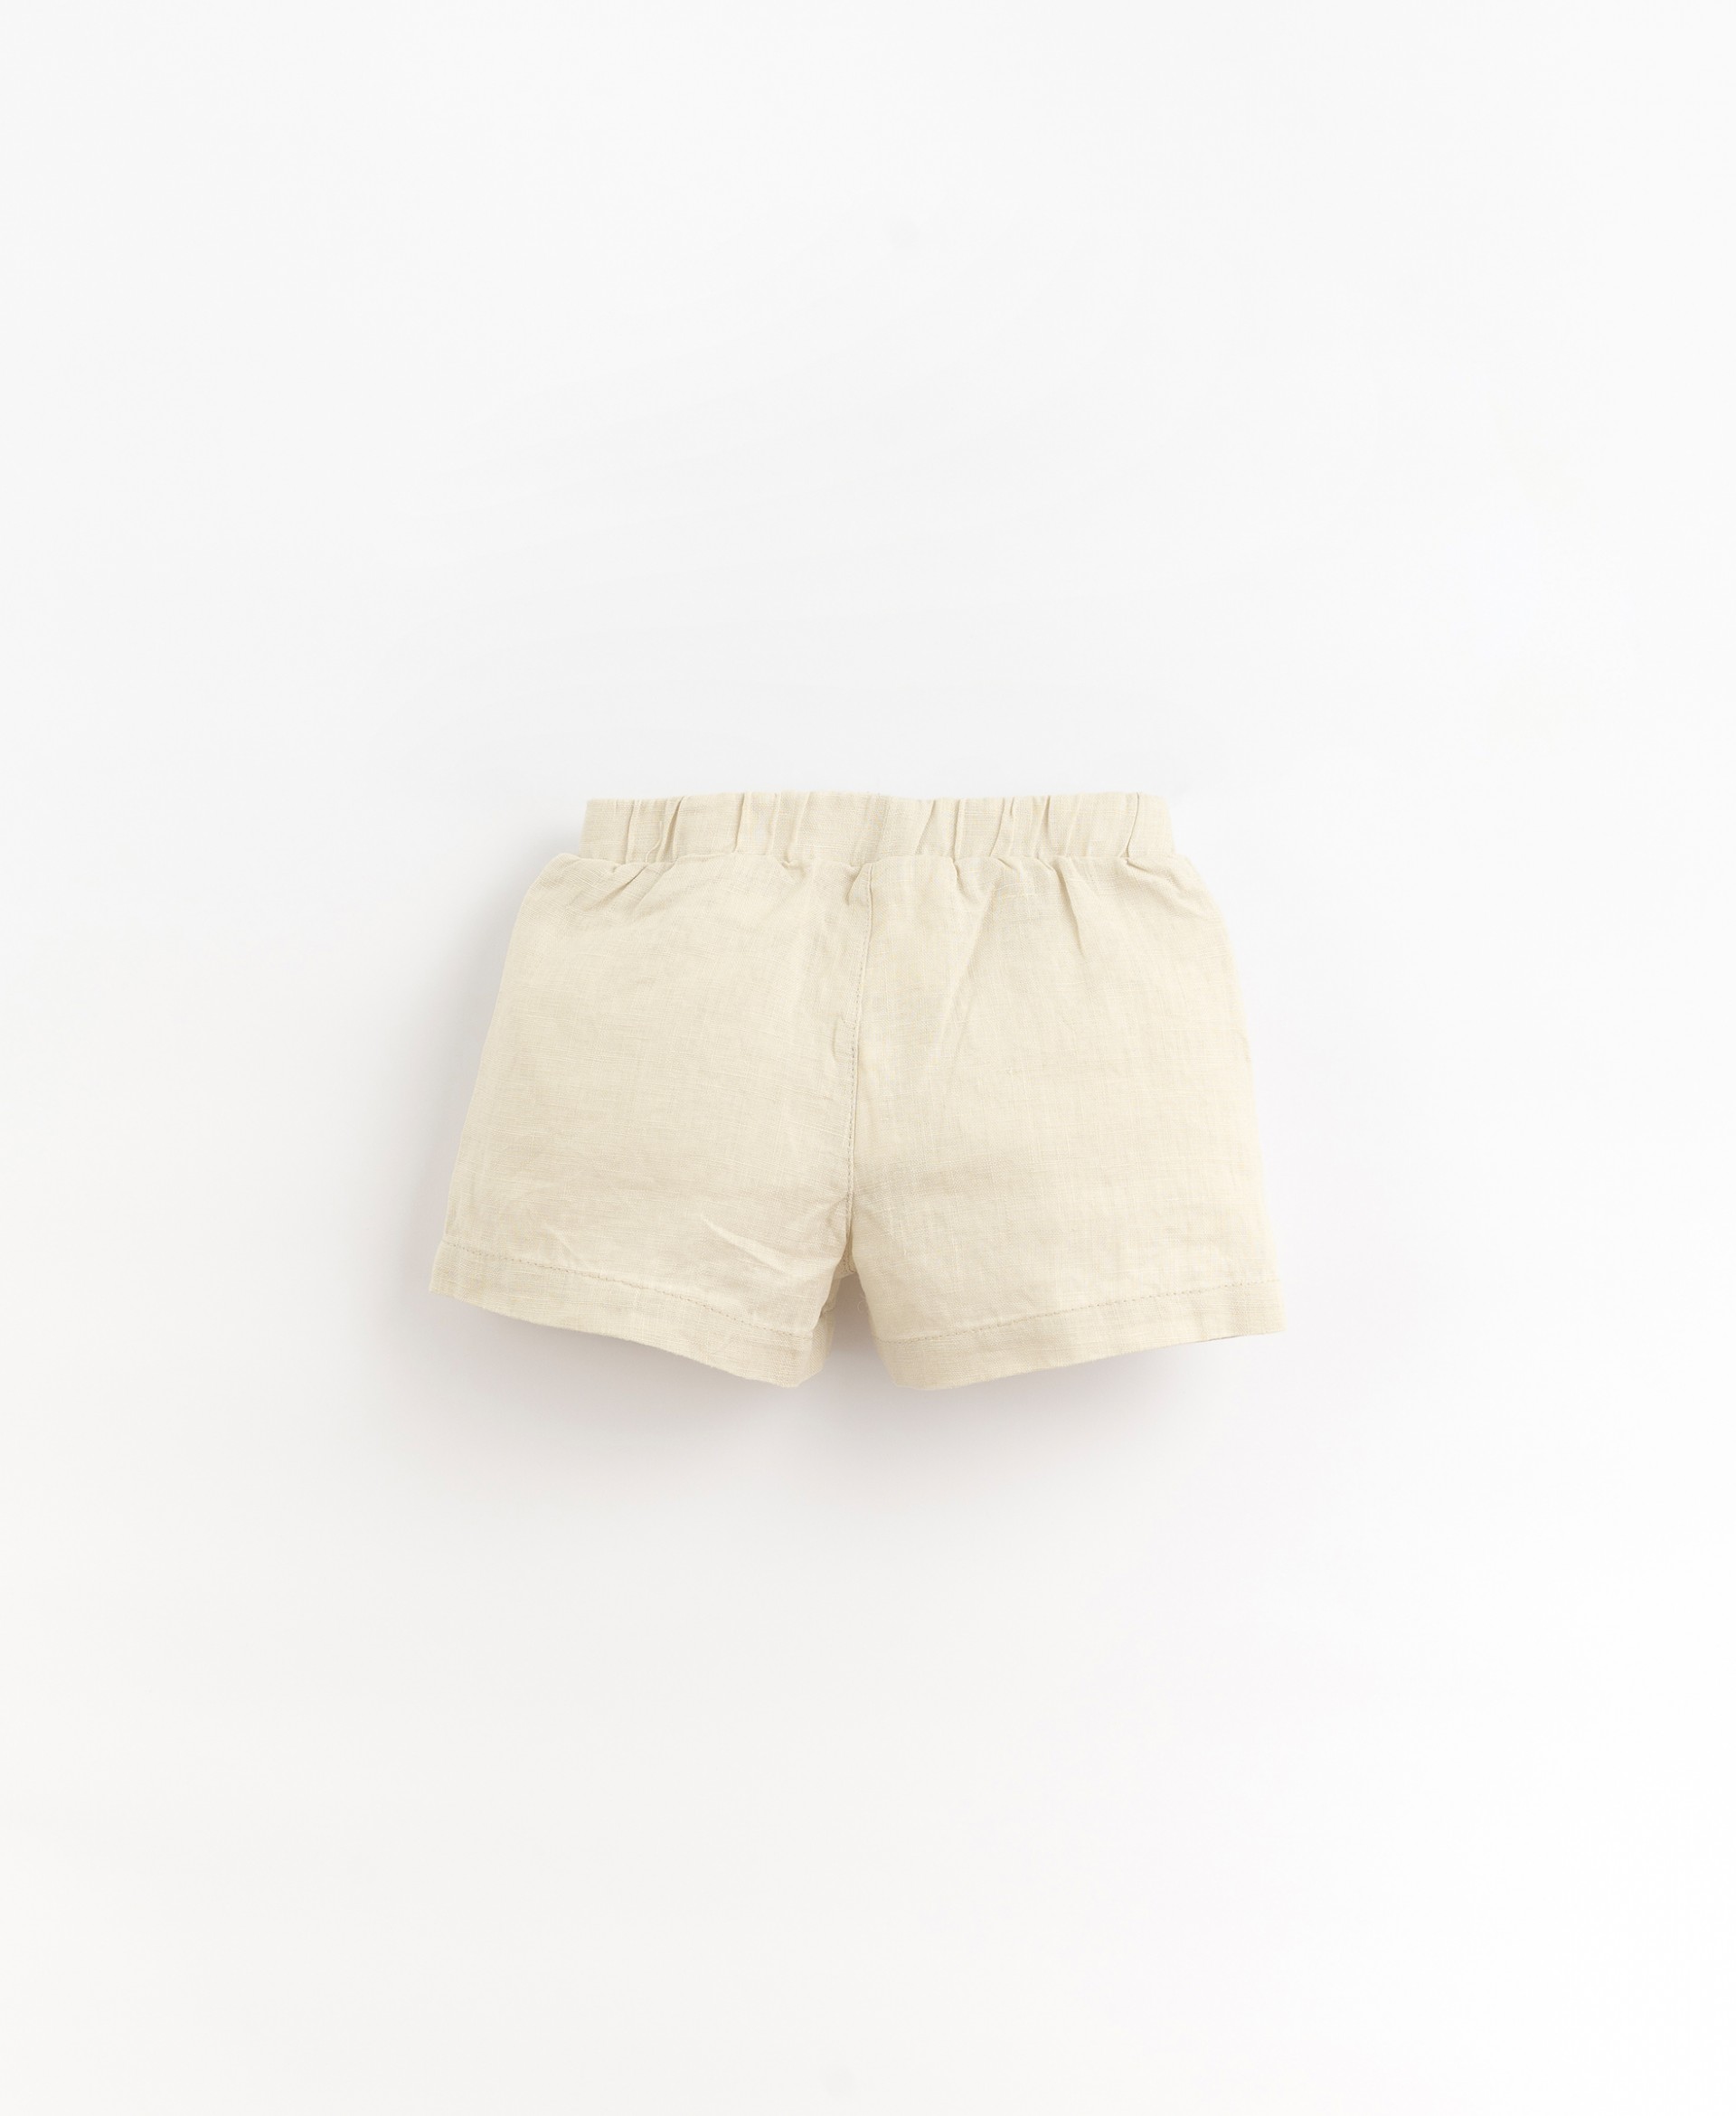 Linen shorts with decorative drawstring | Organic Care